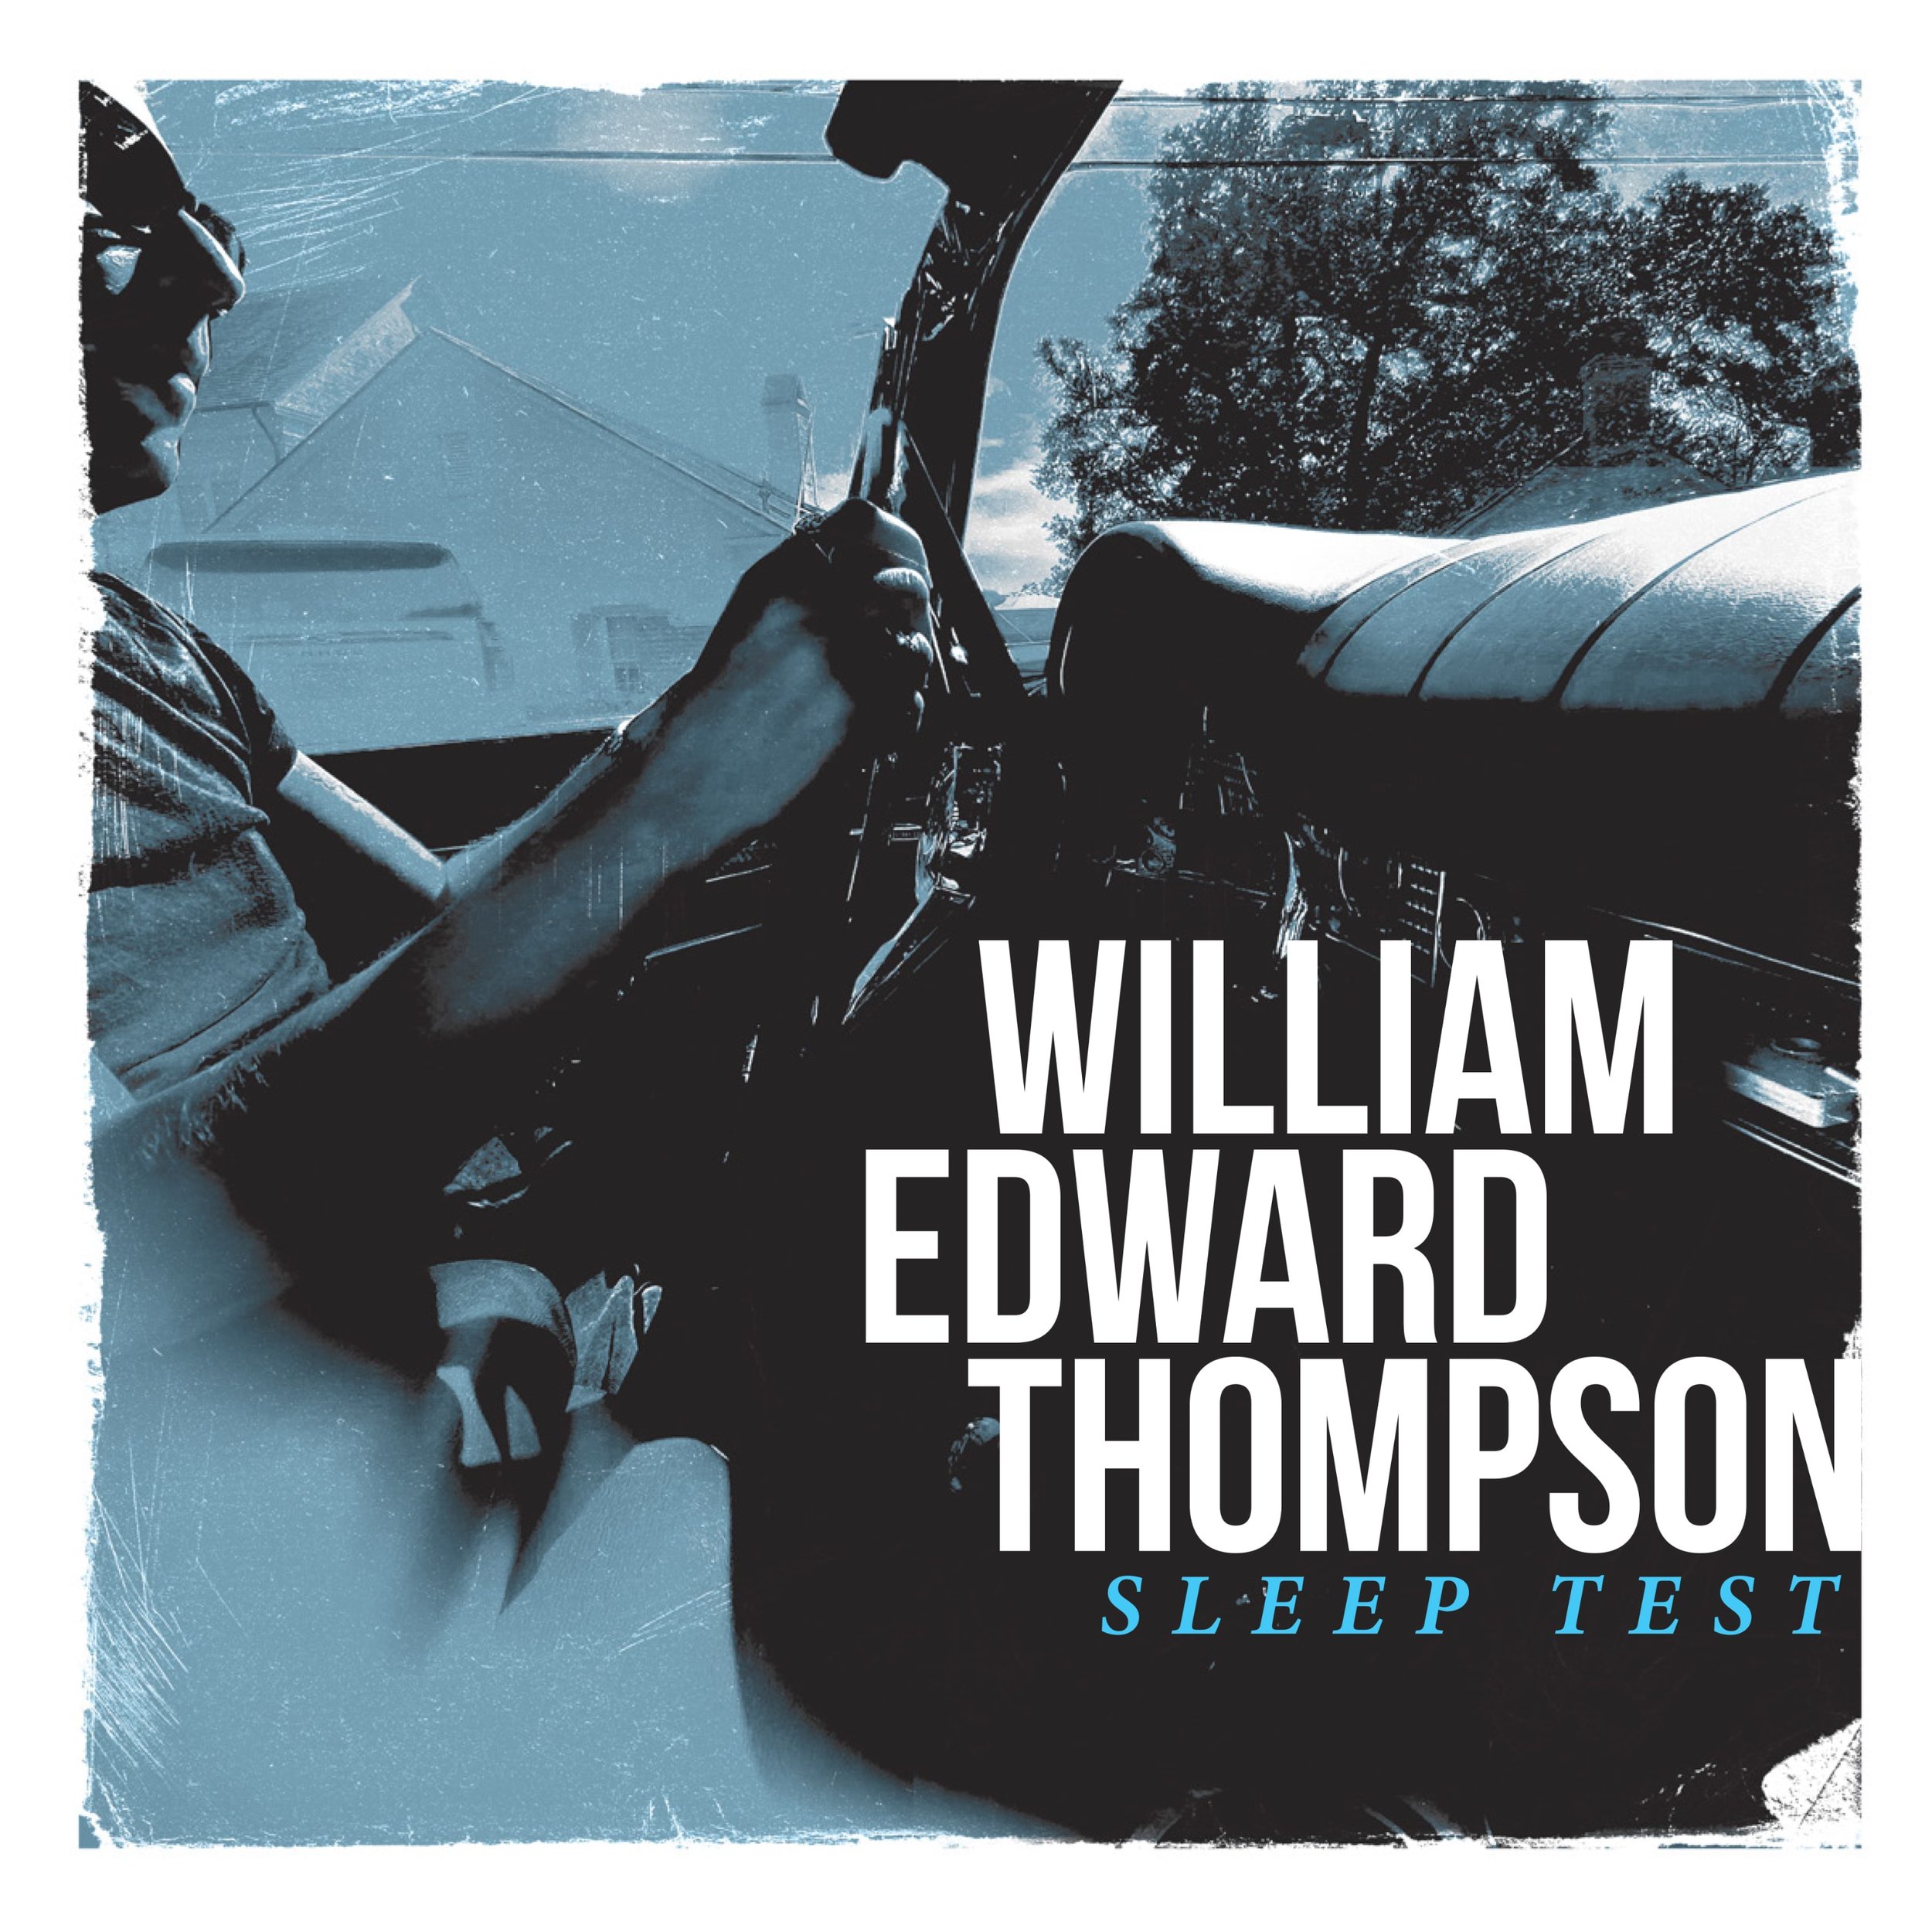 William Edward Thompson - Sleep Test - Cover.jpg